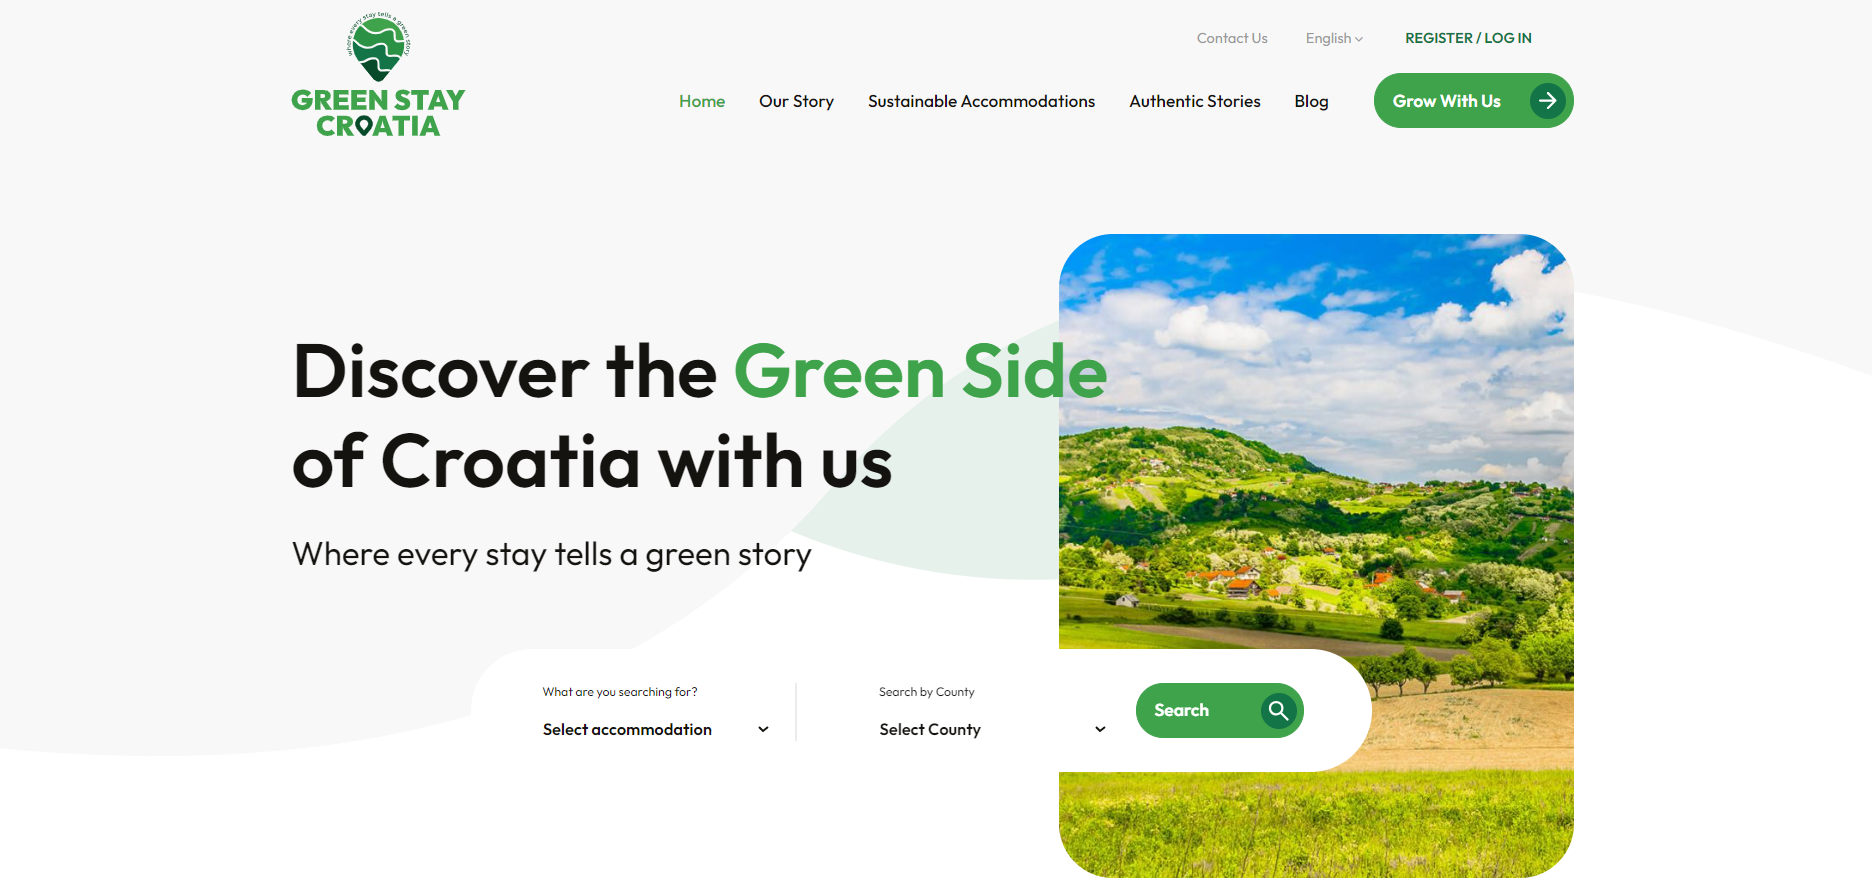 Green Stay Croatia platform launches